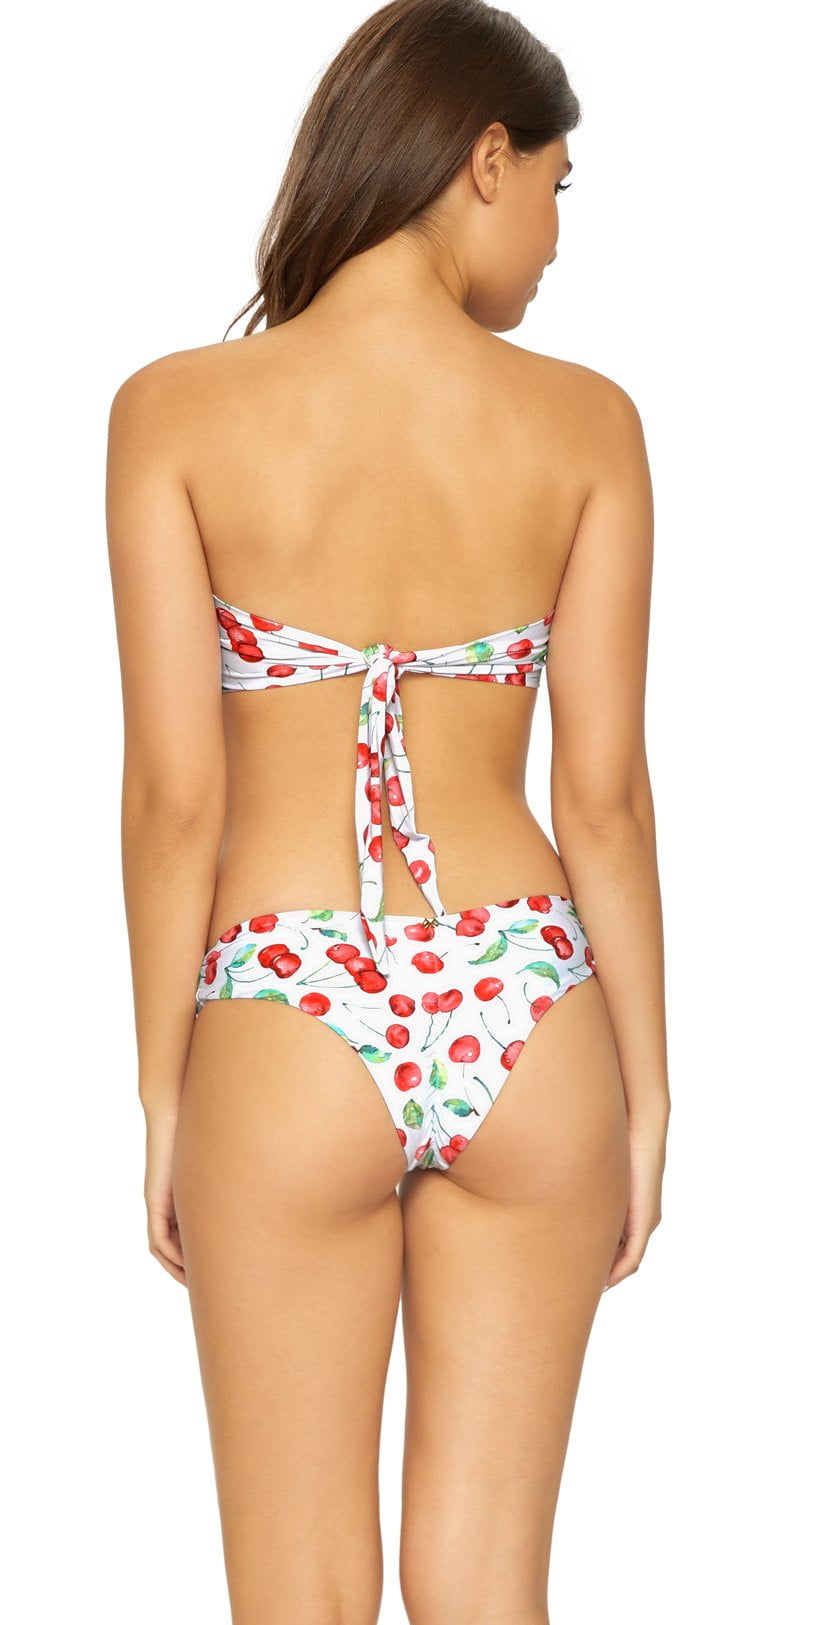 PilyQ Cherry Knot Bandeau Bikini Top CHE-194B: